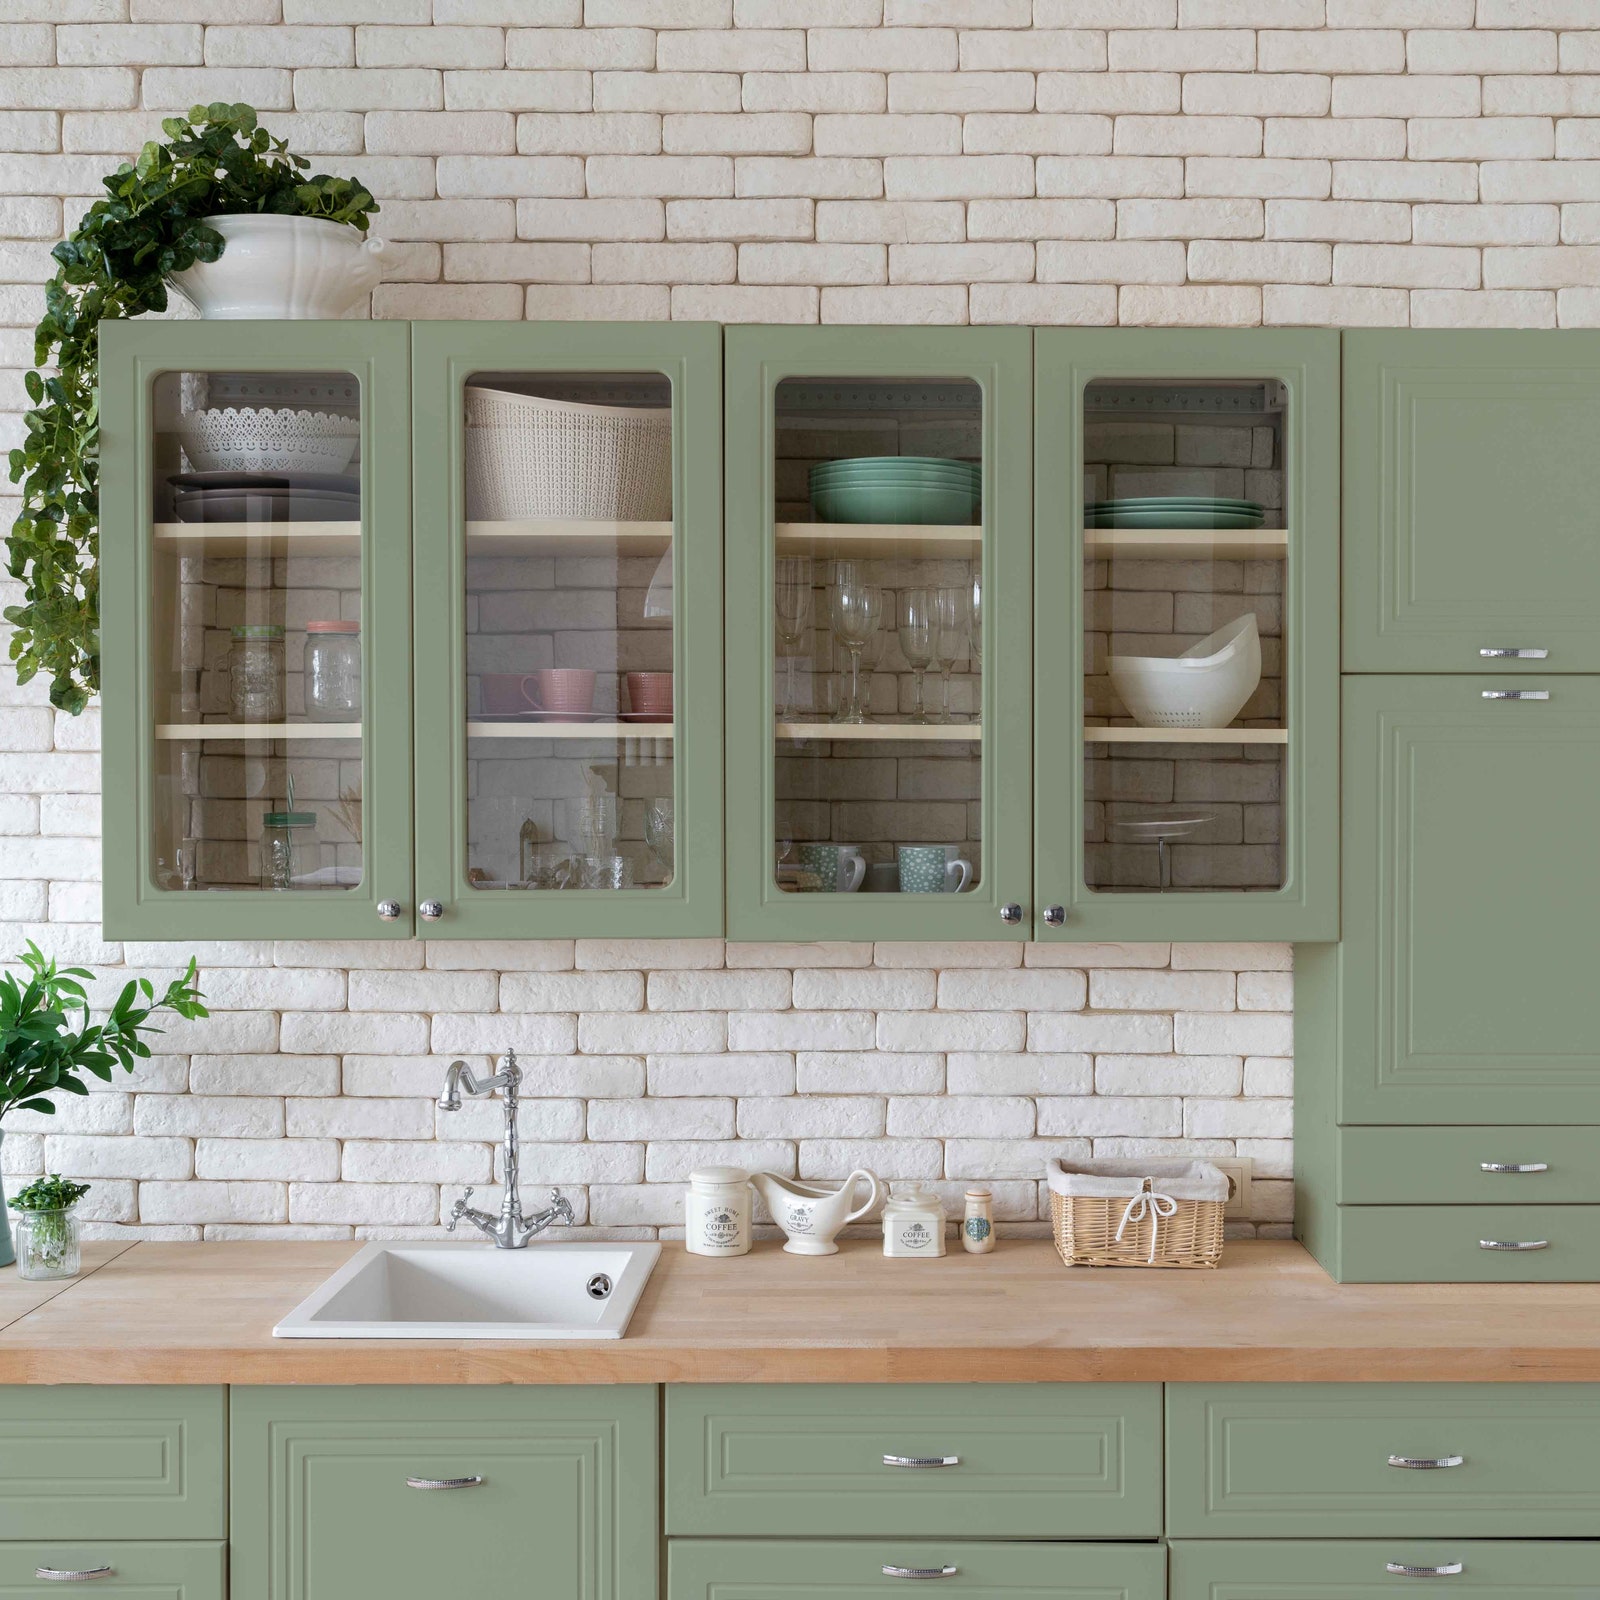 15 Creative Green Kitchen Ideas From Interior Designers